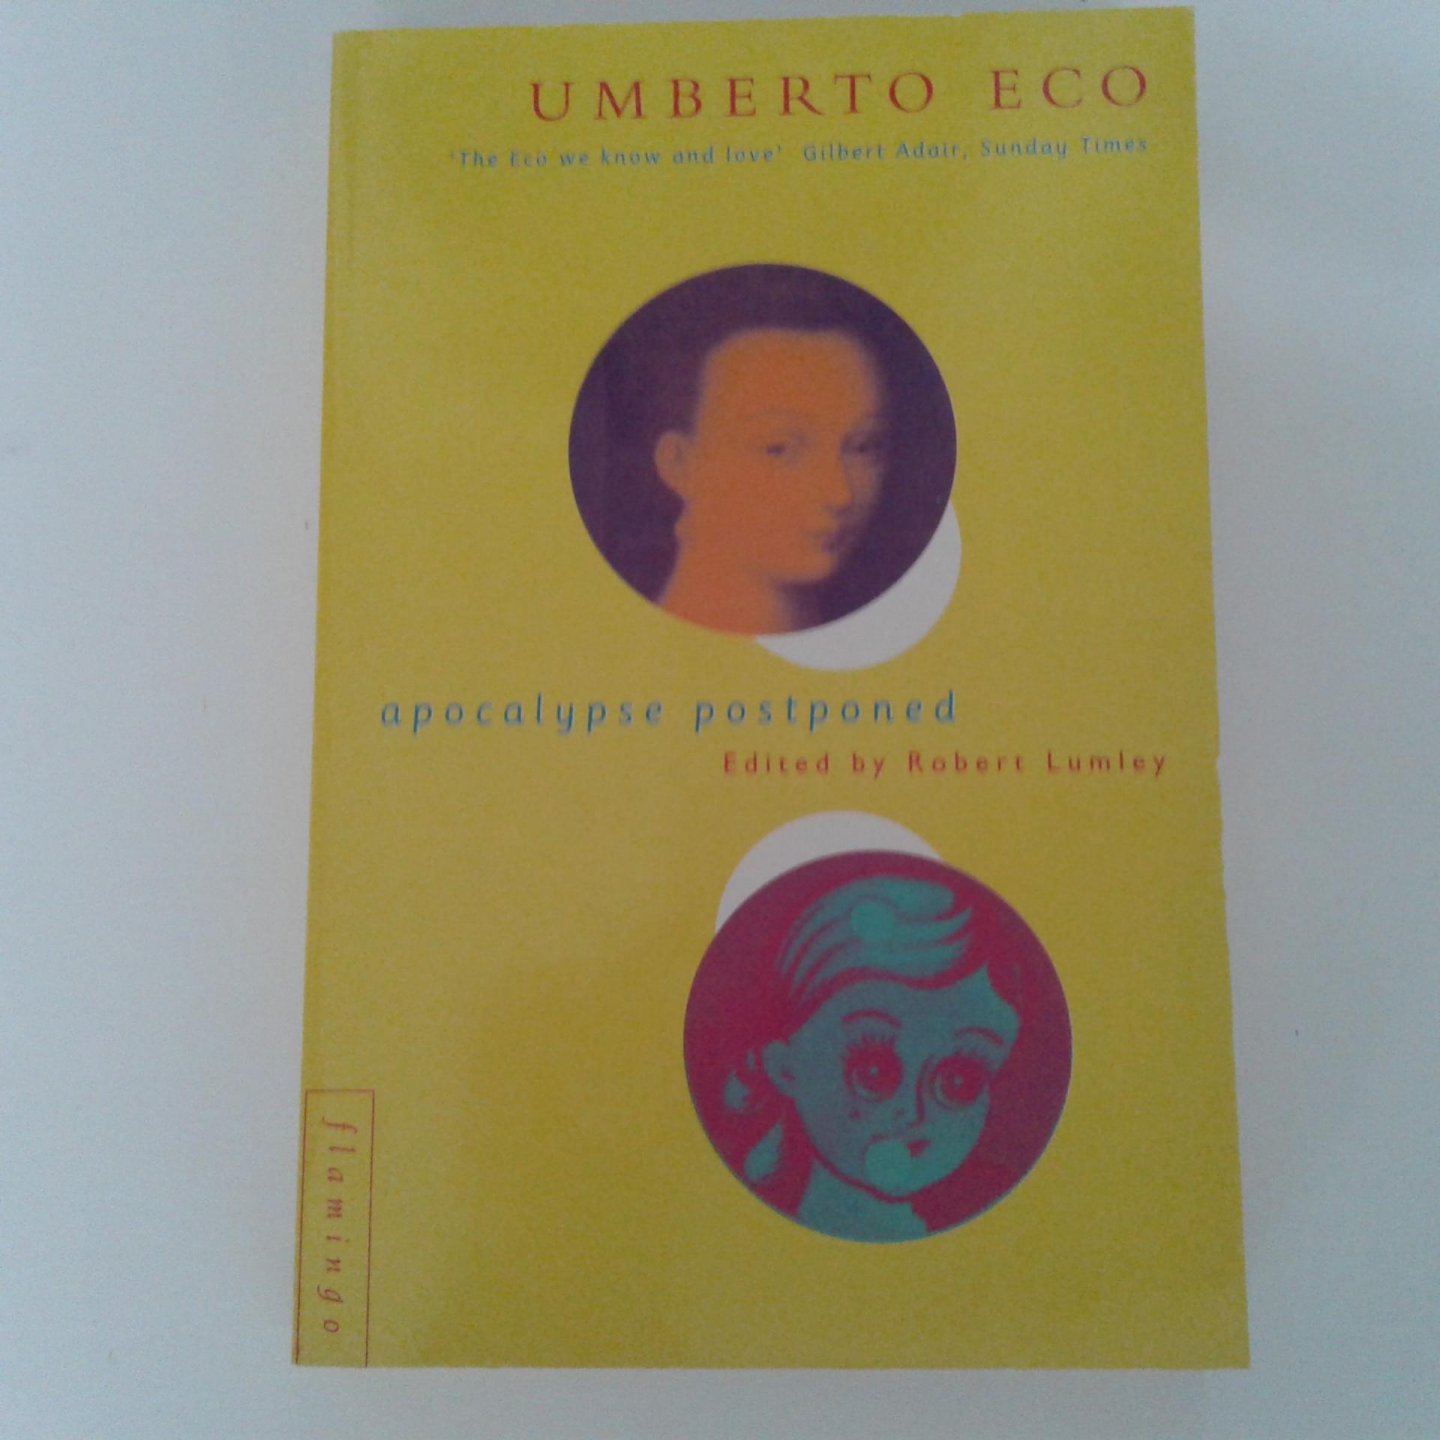 Eco, Umberto ; Robert Lumley - apocalypse postponed